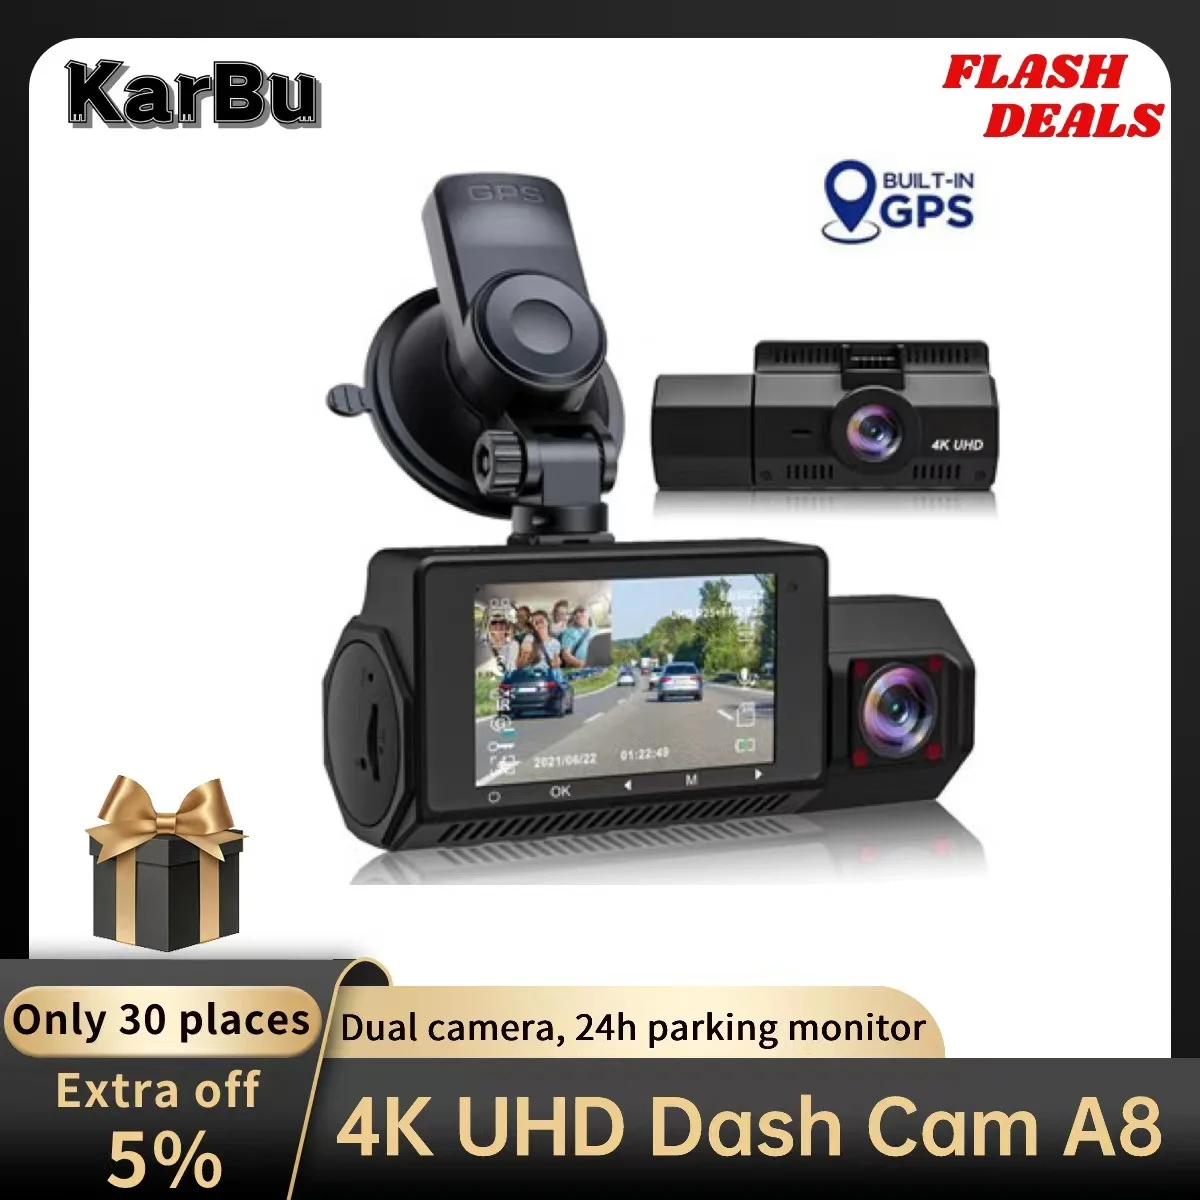 https://ae01.alicdn.com/kf/S2ea4d468b98e40c3a9ddc7e912f8d5099/Dash-Cam-Dual-Camera-4K-For-Car-Video-Recorder-UHD-Night-Vision-Dashcam-GPS-24h-Parking.jpg